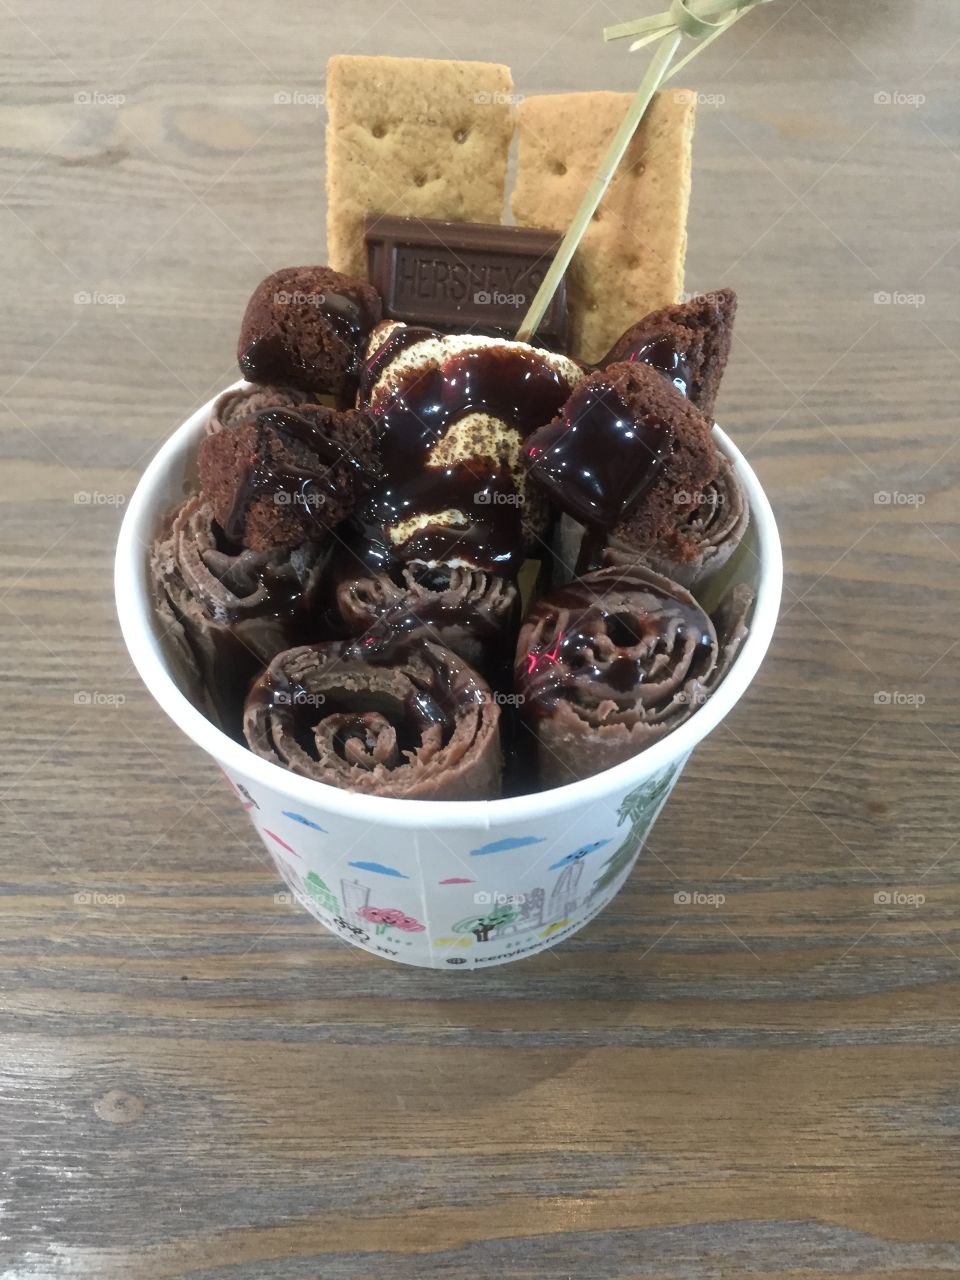 Chocolate ice cream roll